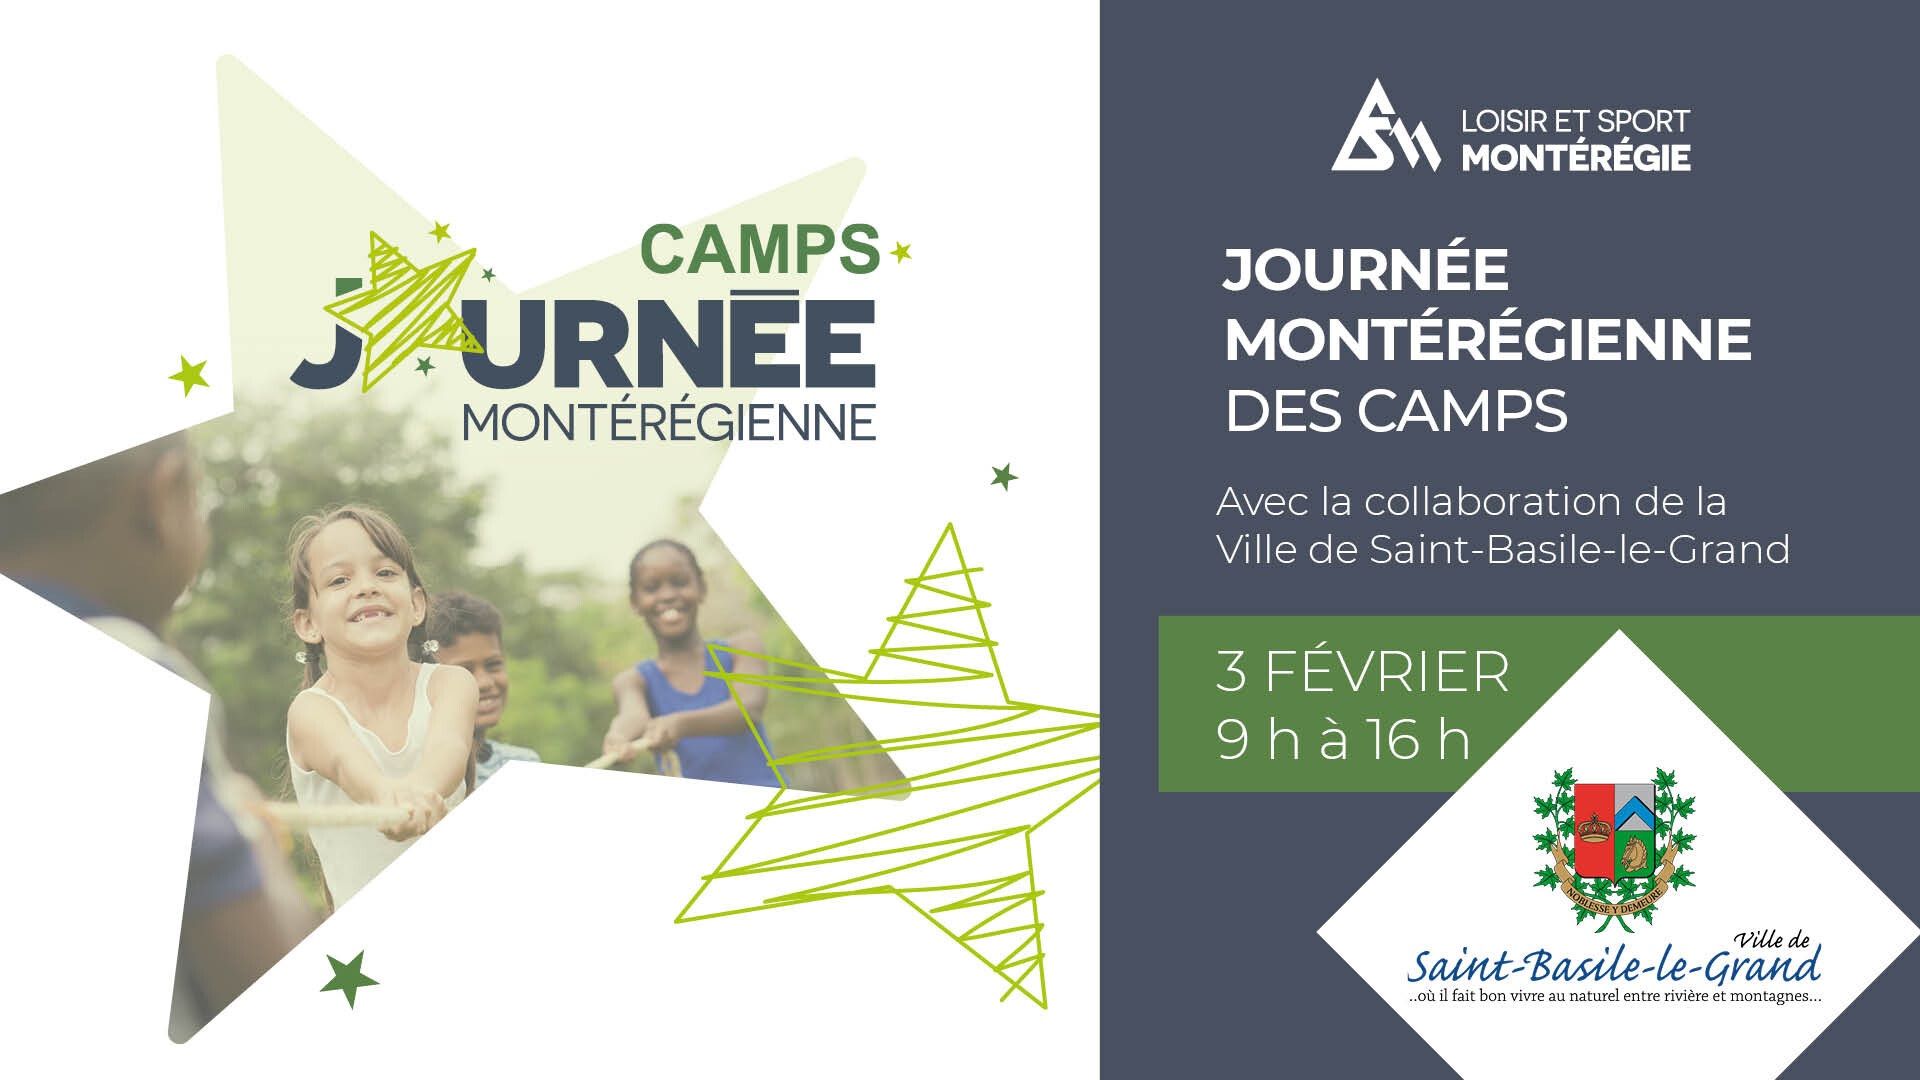 CAMP Journee Monteregienne 2022 1920x1080 V2